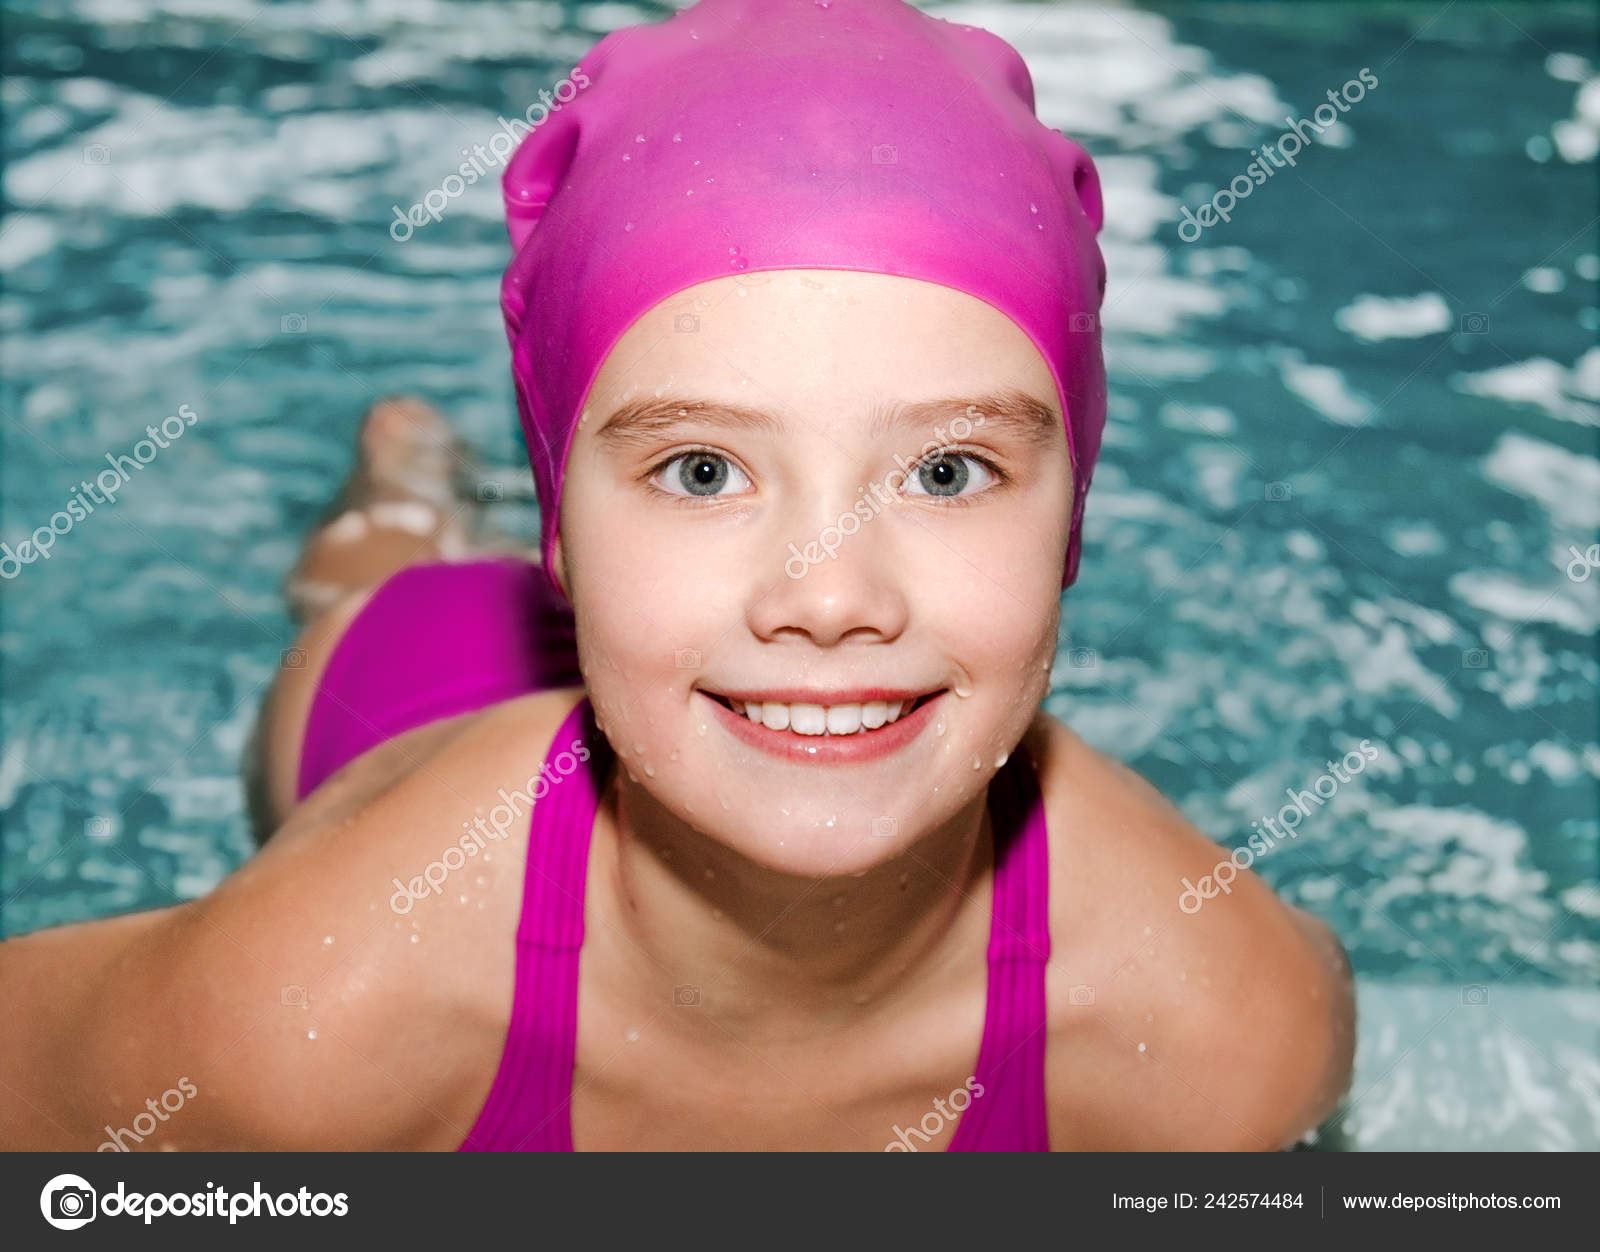 Retrato Linda Niña Sonriente Nadadora Infantil Traje Baño Rosa Gorra:  fotografía de stock © svetamart #242574484